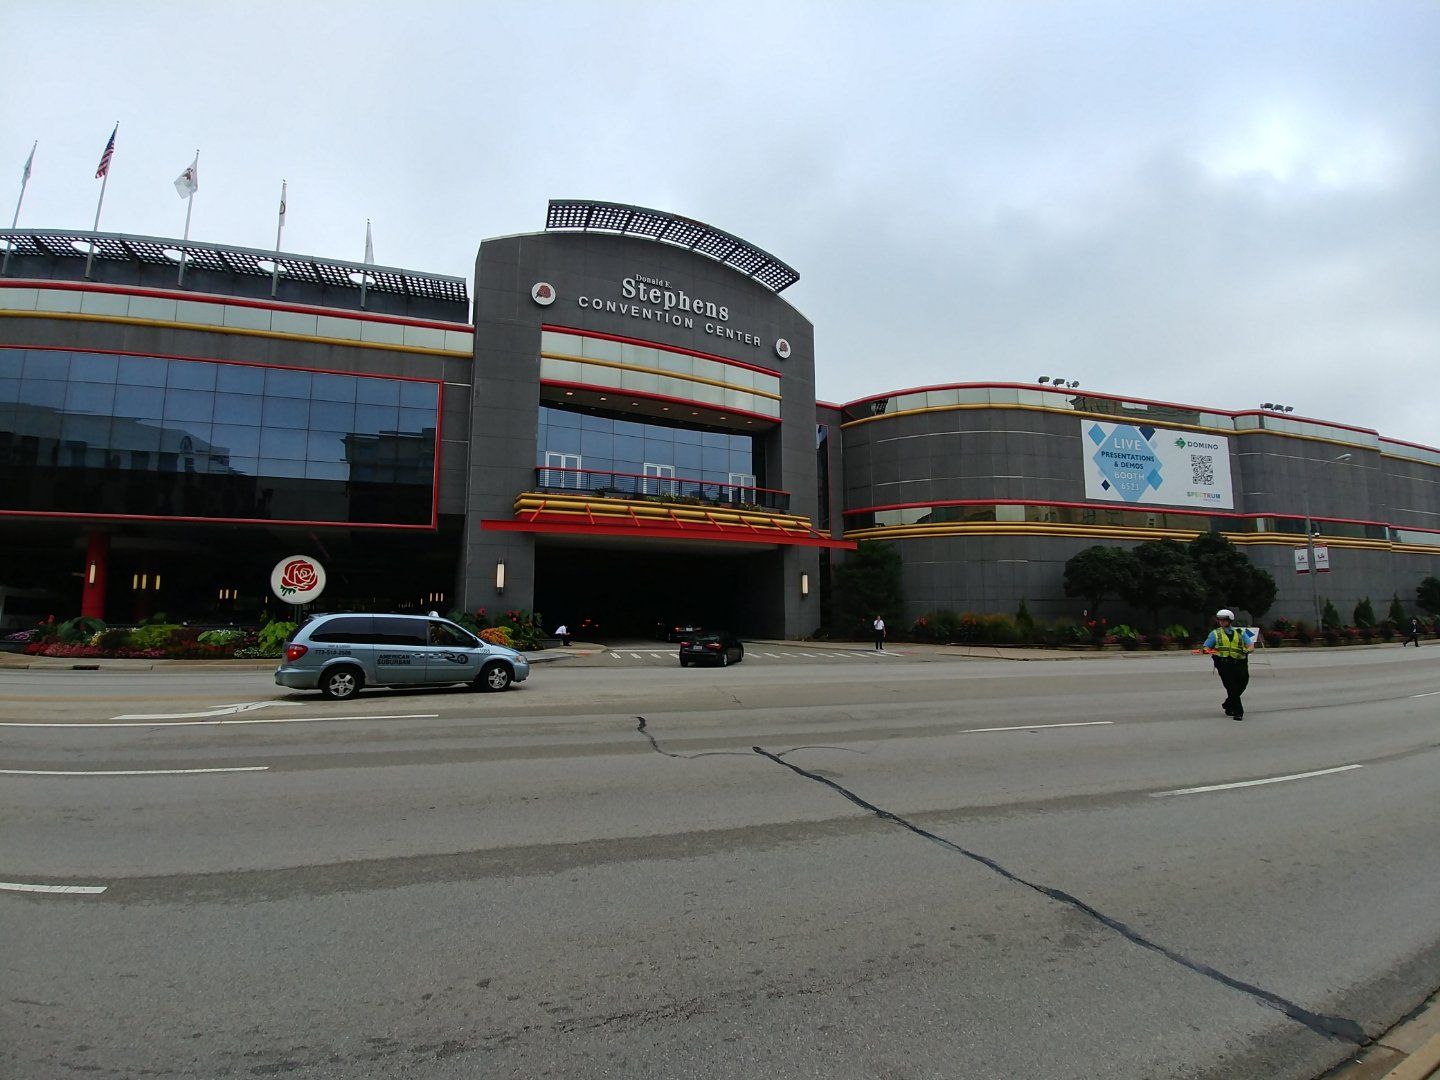 Convention Center Entrance